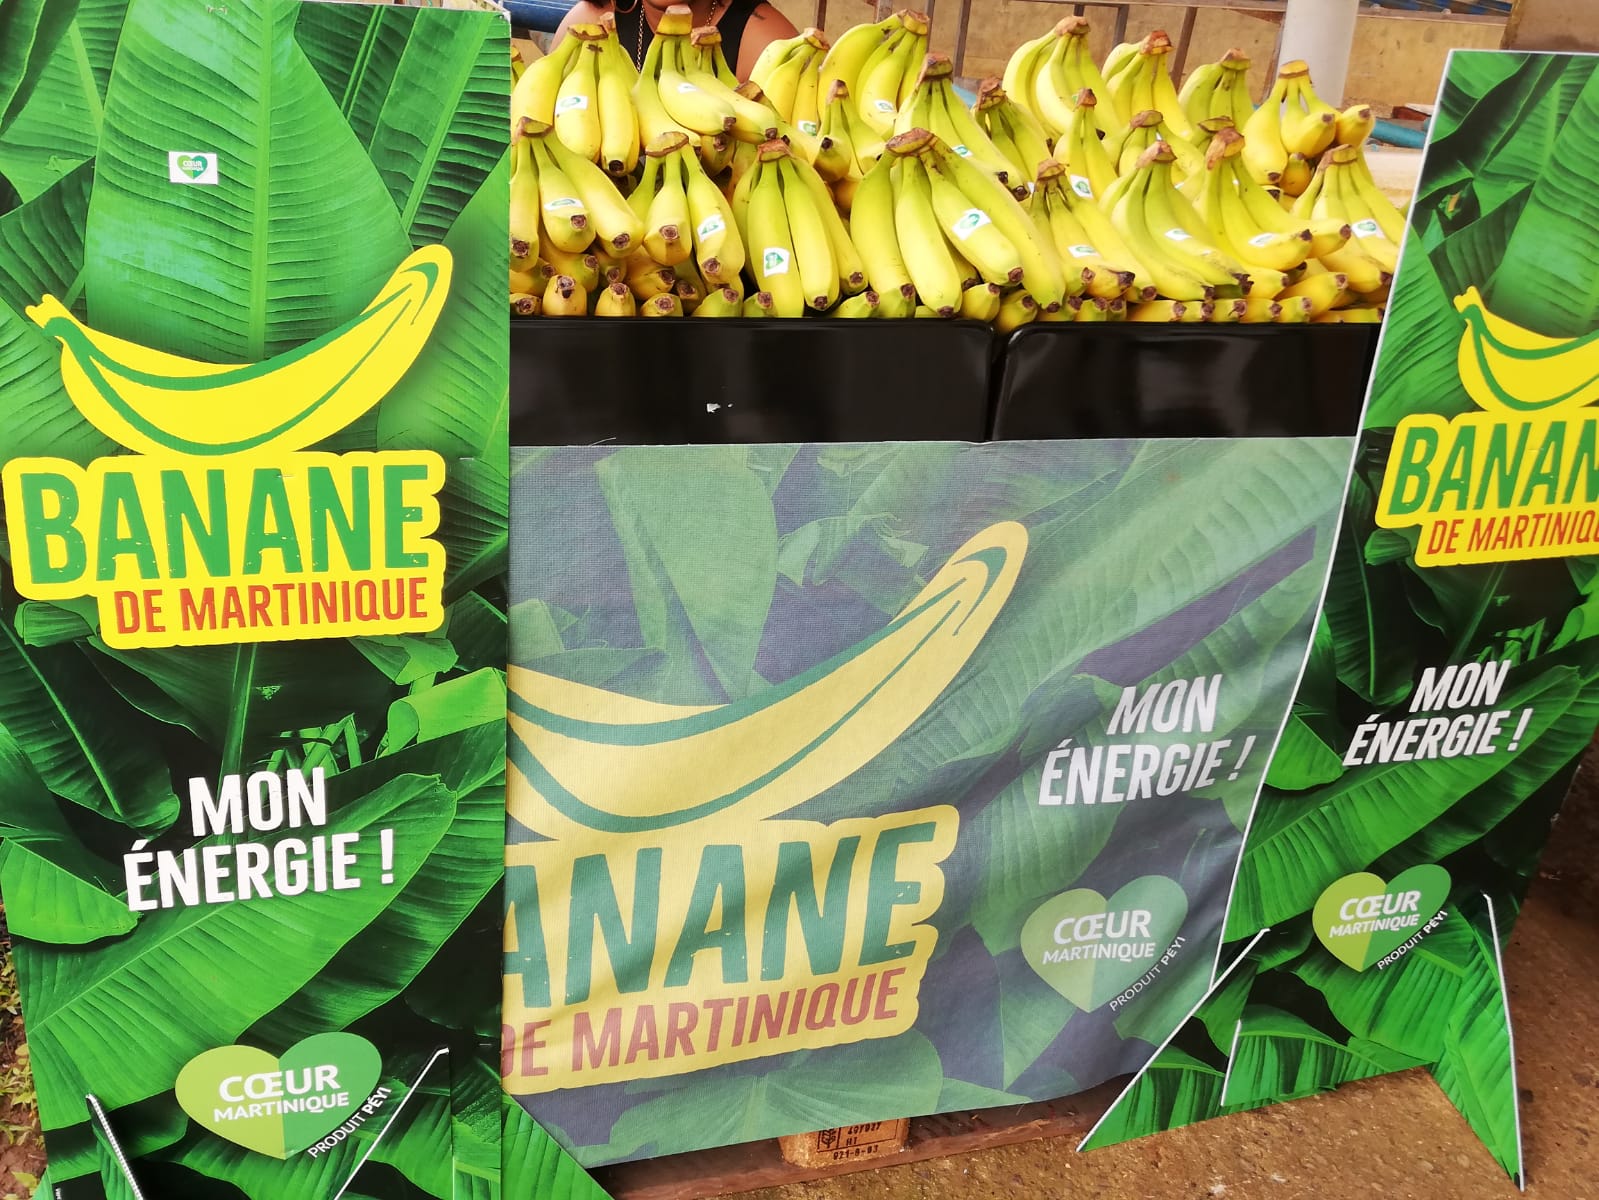 Banane de Guadeloupe Martinique